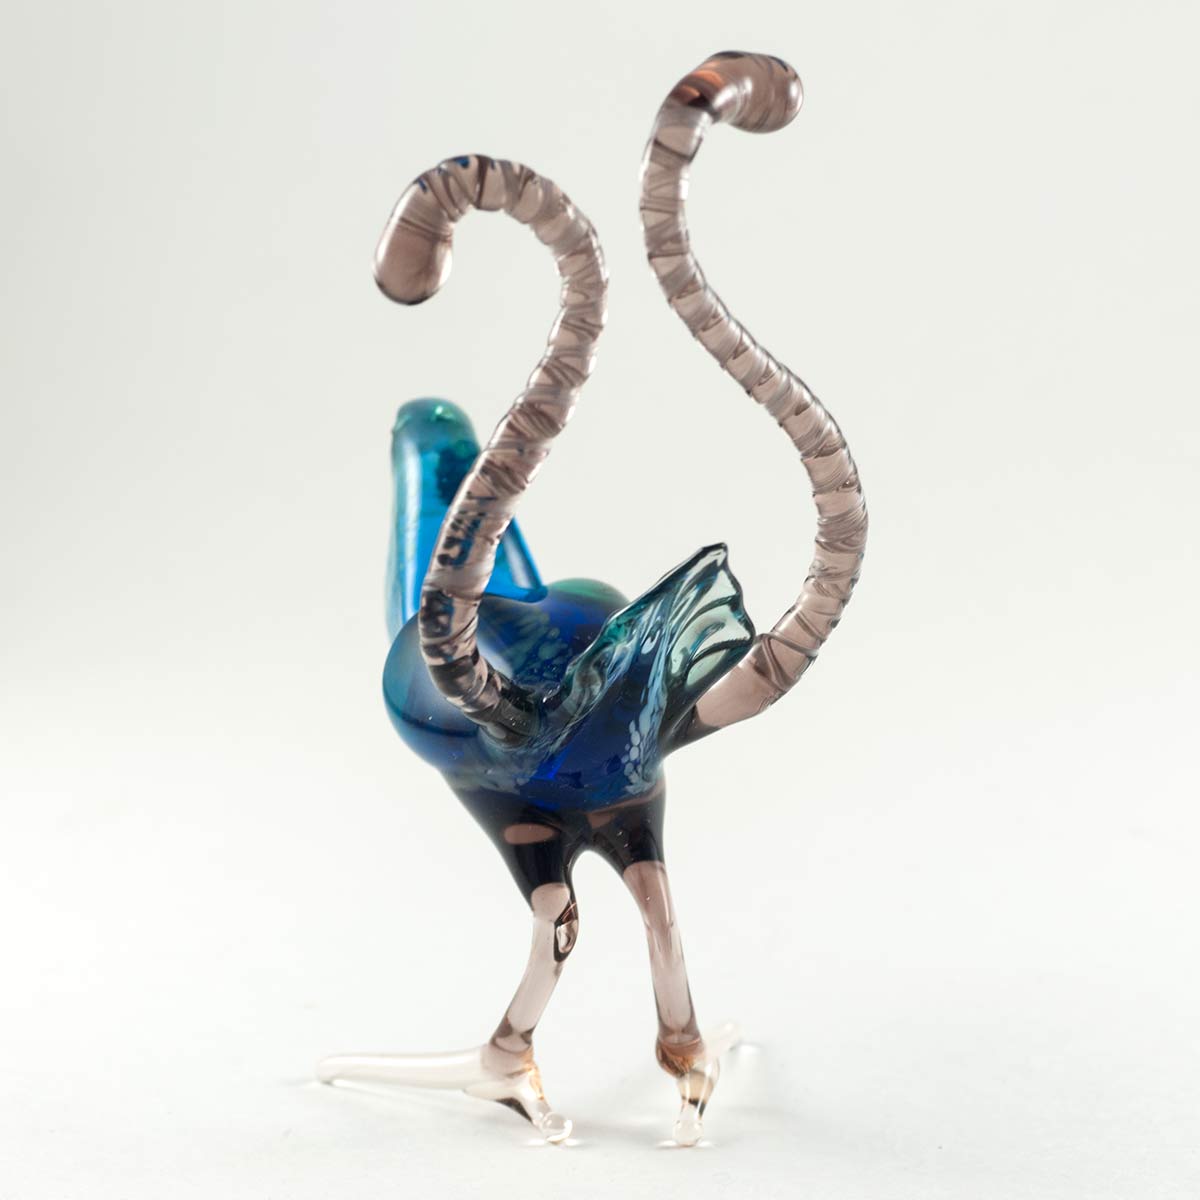 Lyre Bird Glass Figurine - Blown Glas Birds Figures in Glass Figurines Birds category